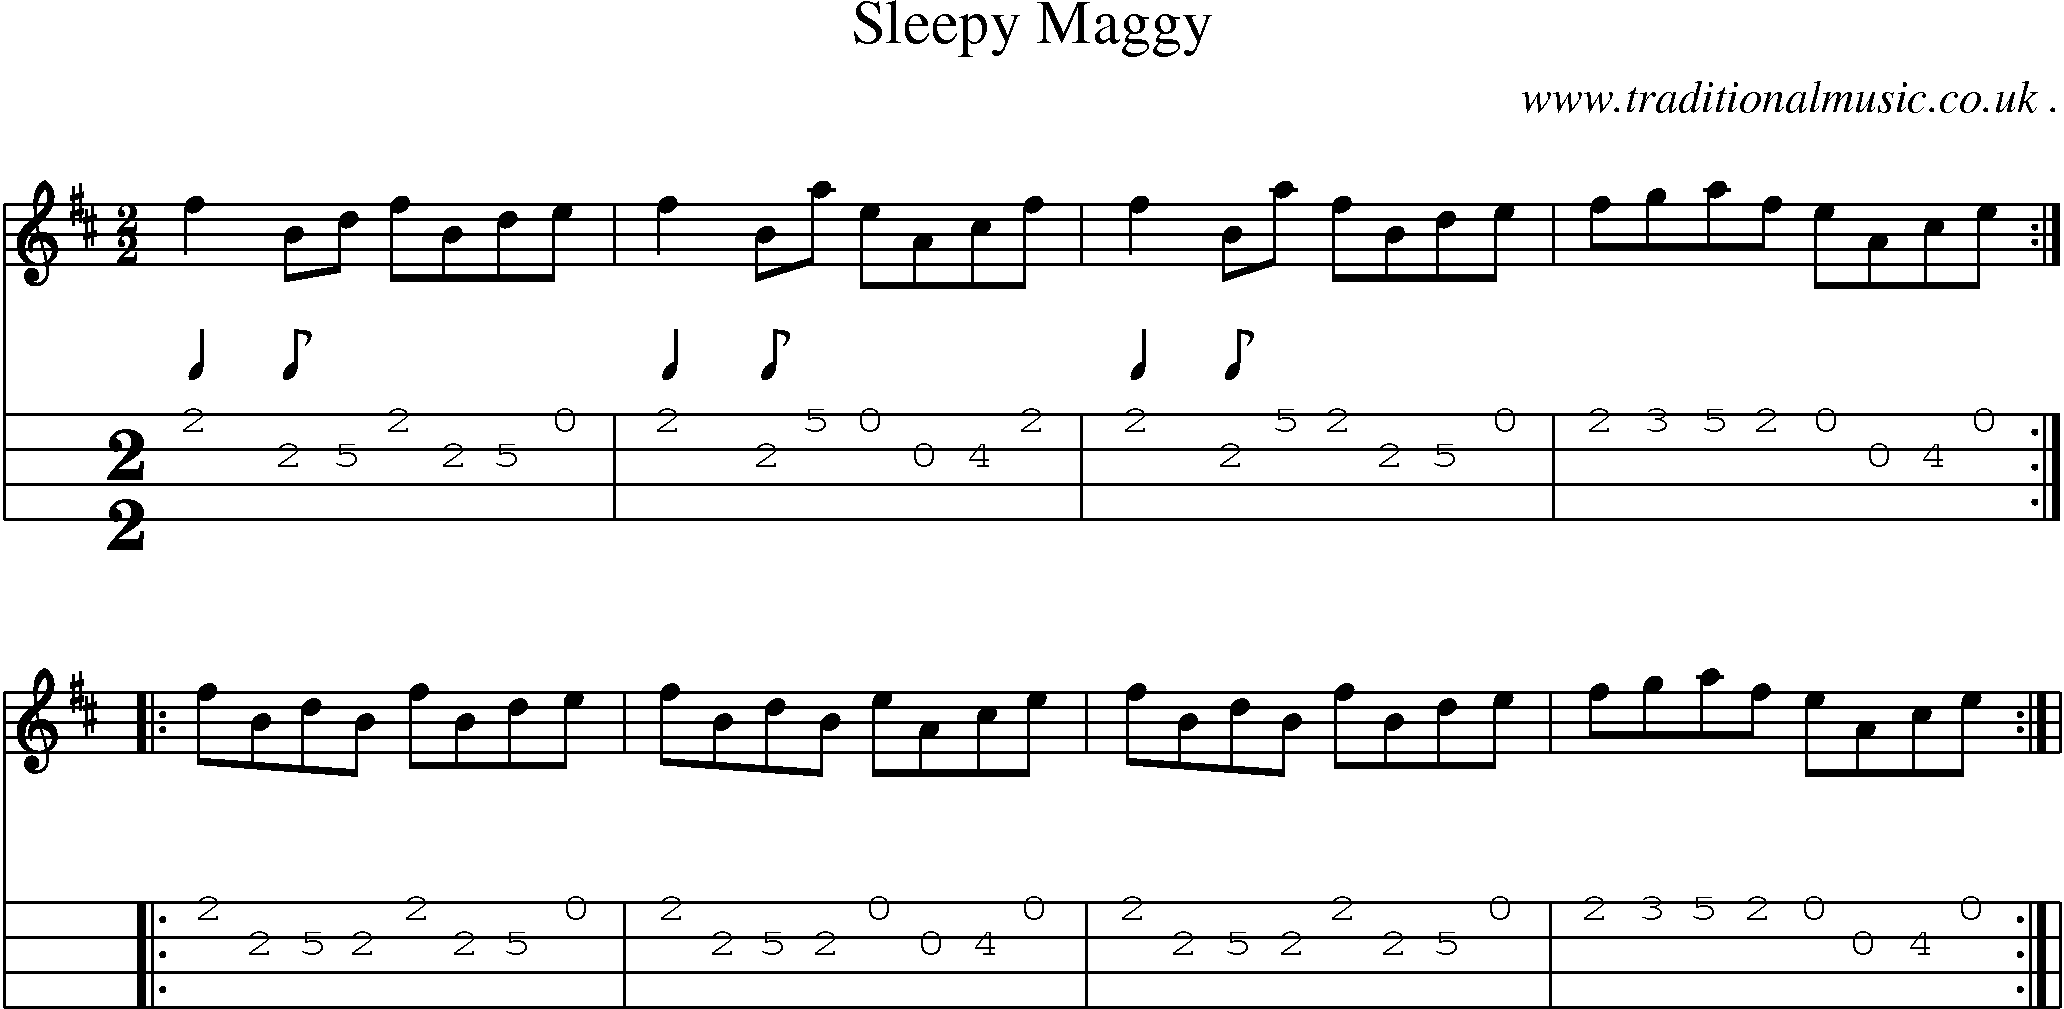 Sheet-Music and Mandolin Tabs for Sleepy Maggy